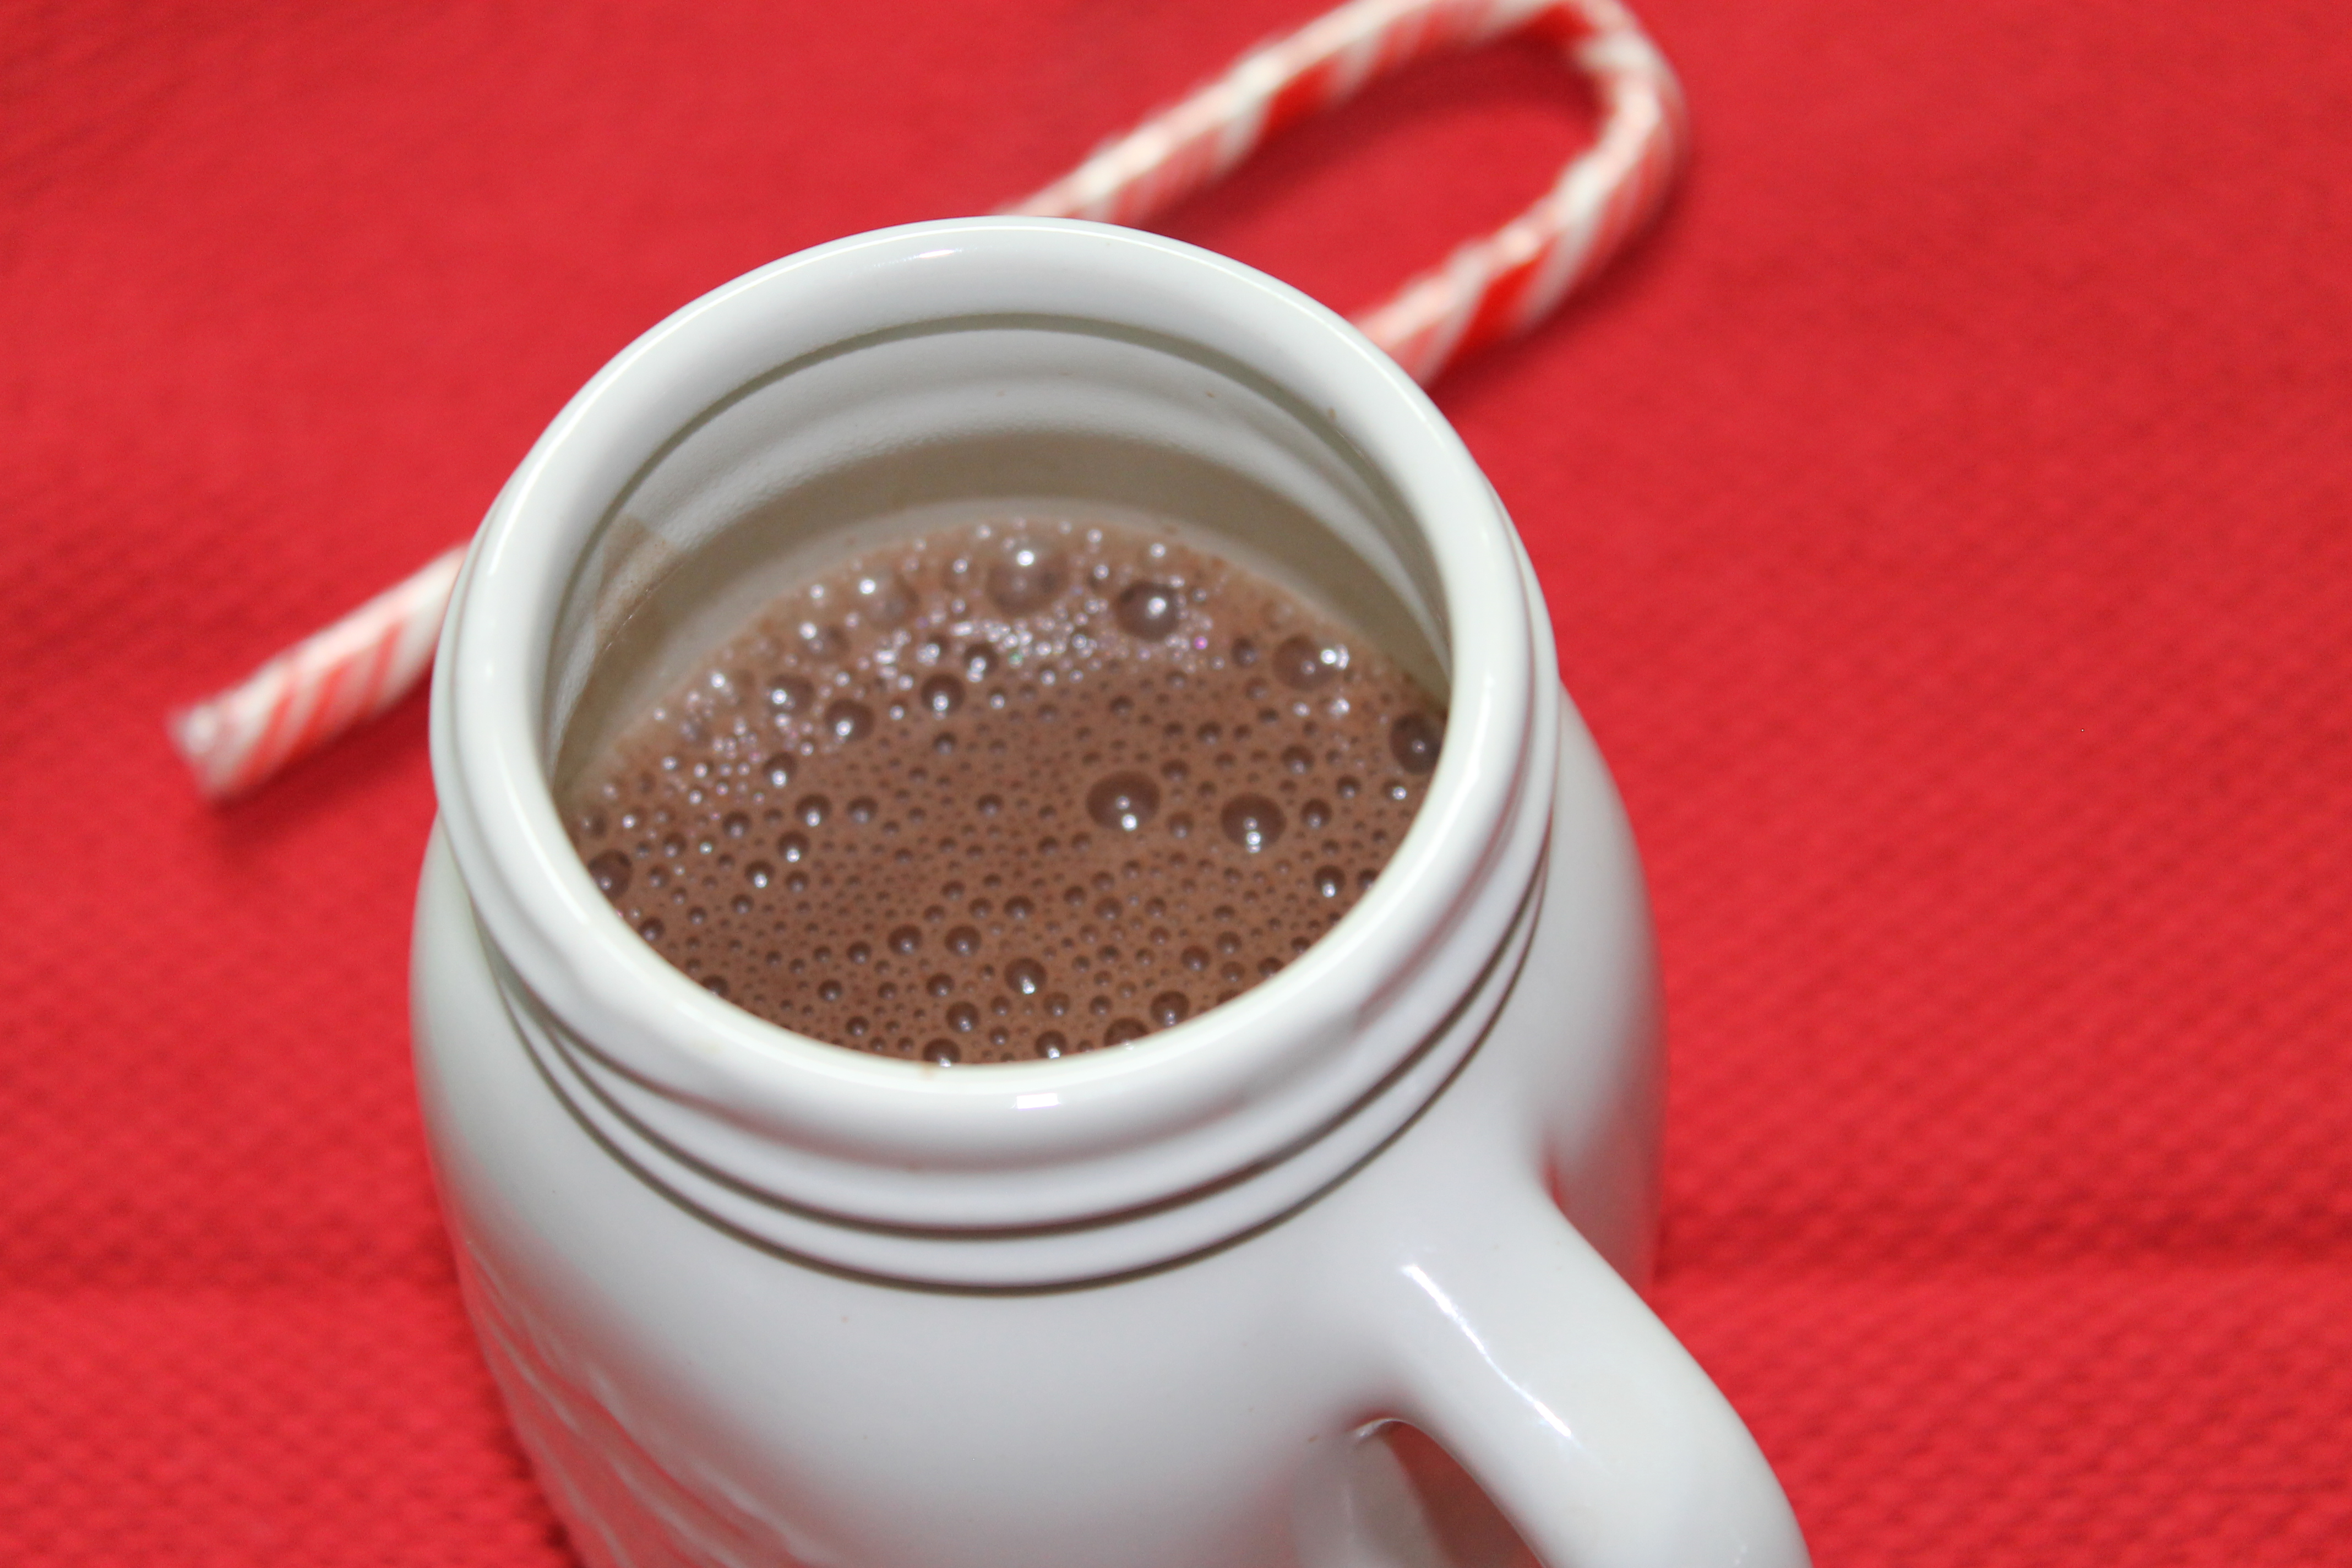 DIY Hot Chocolate